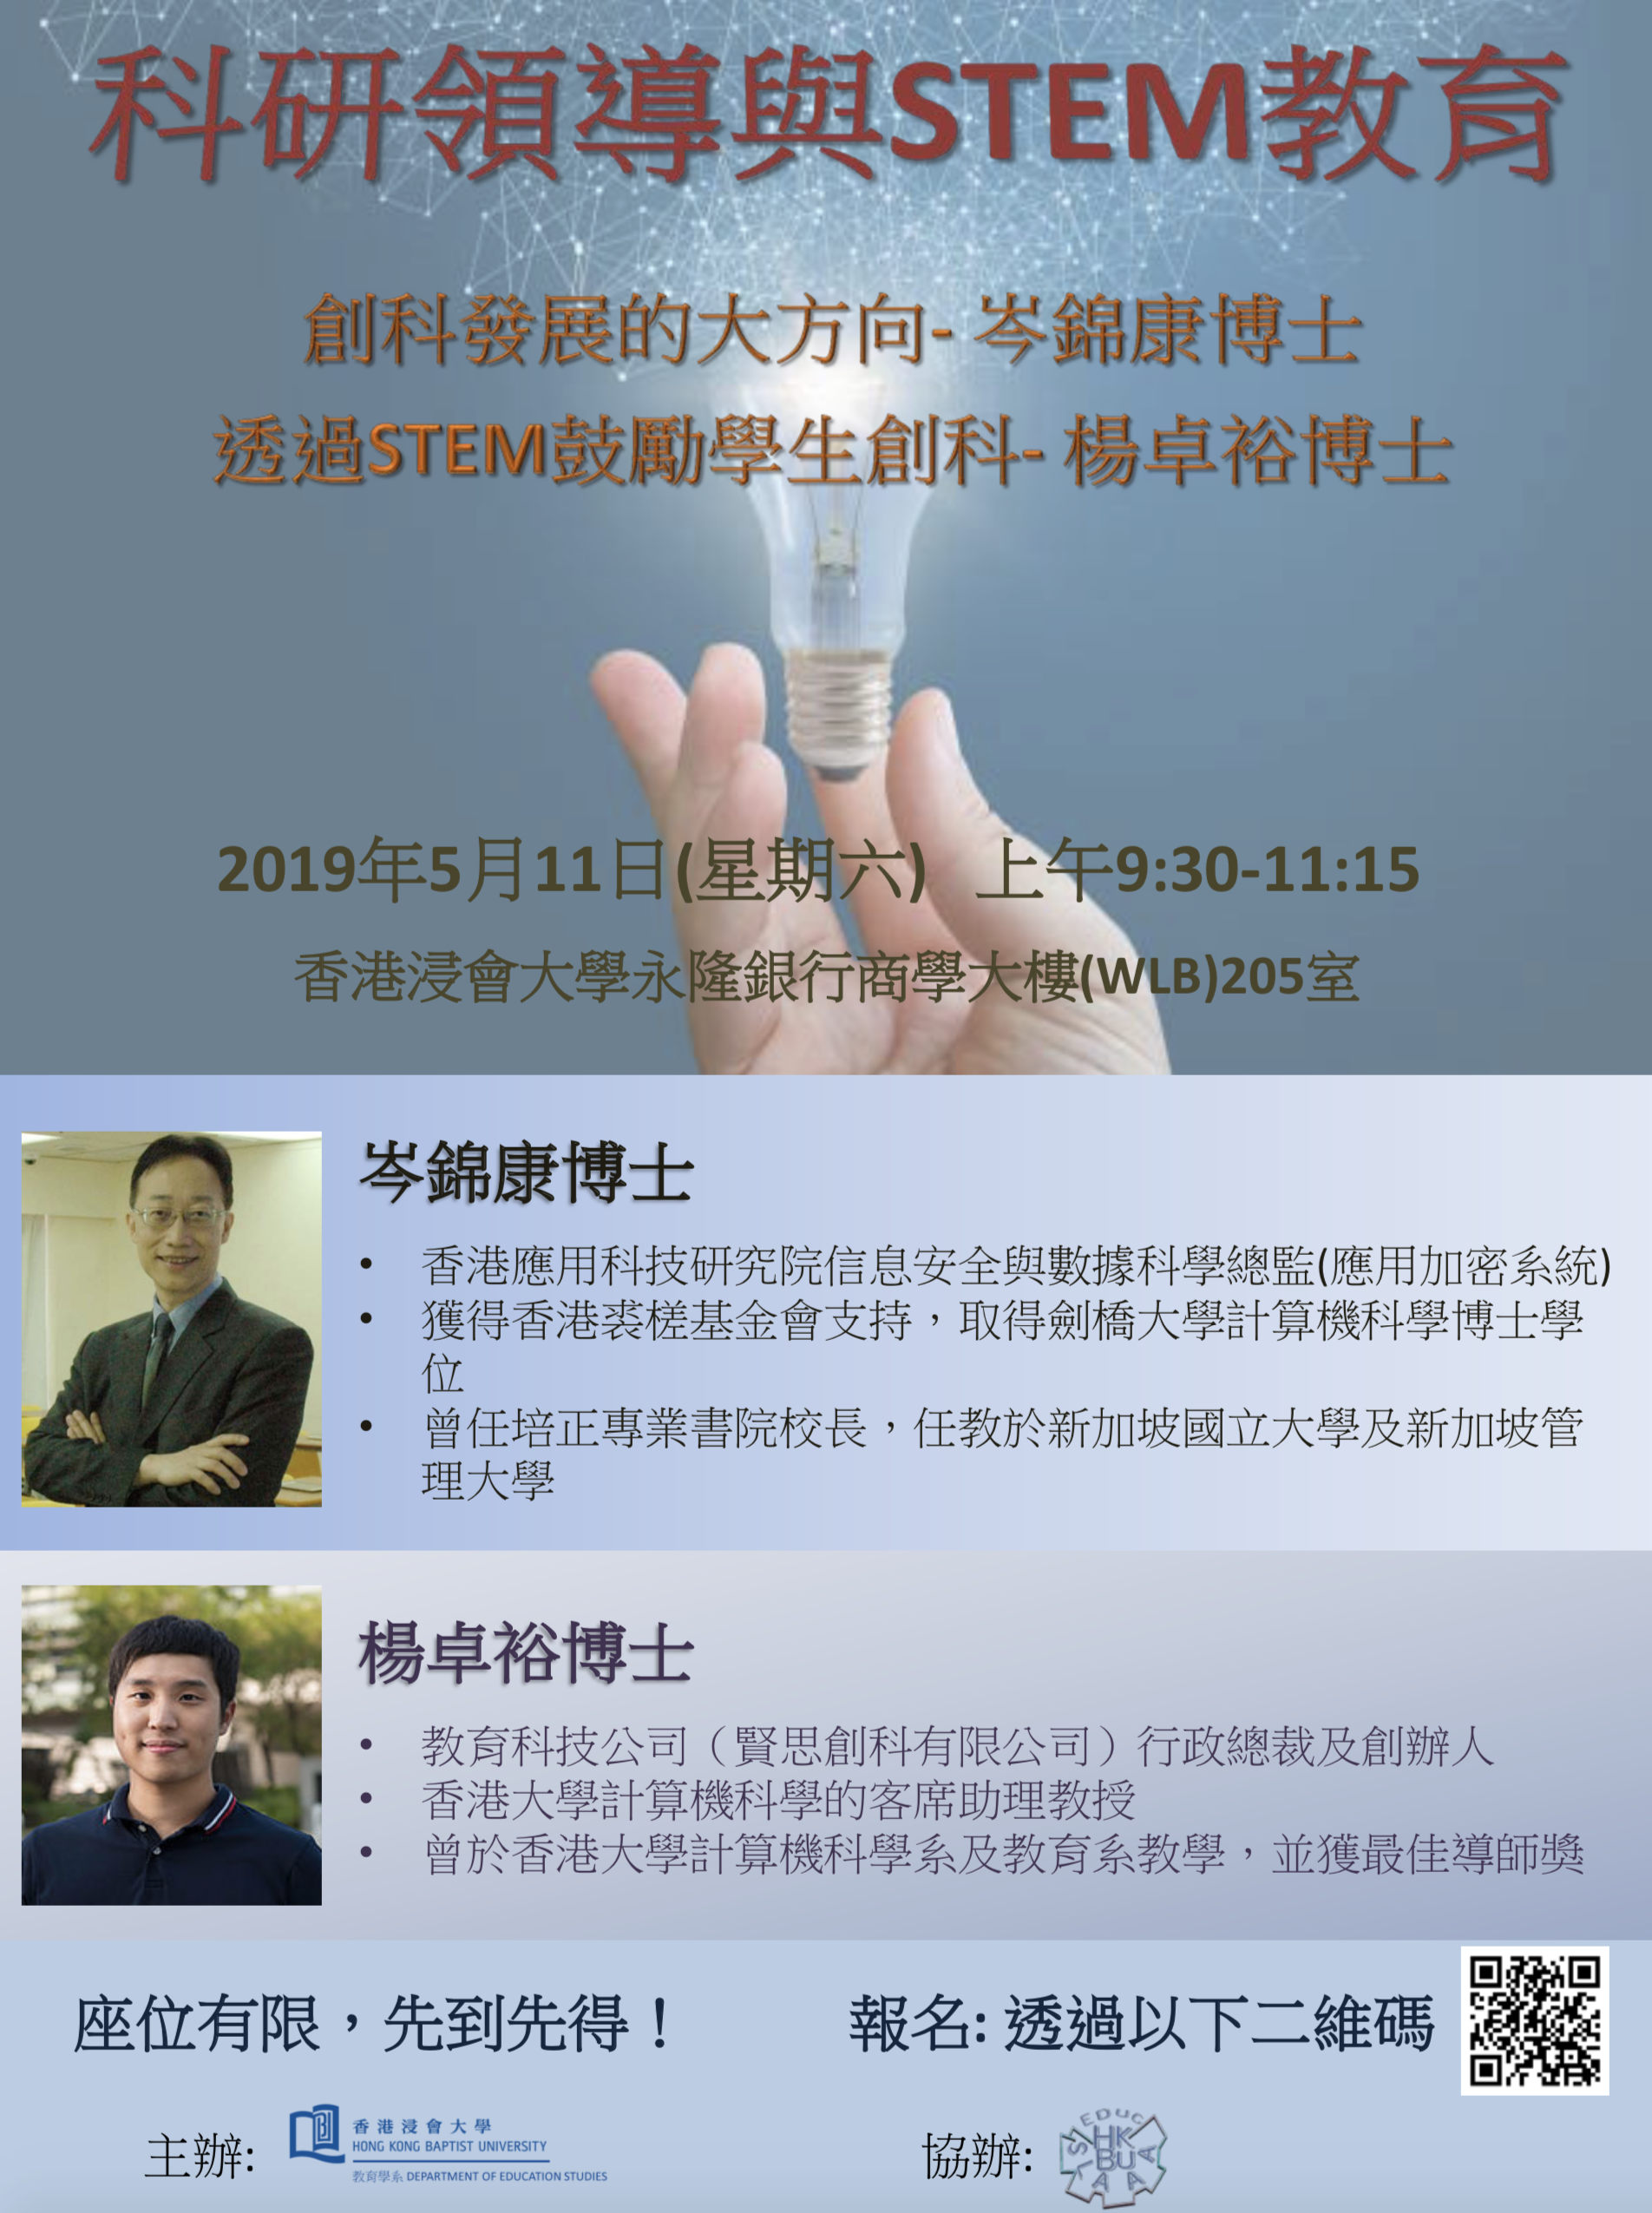 Sharing about Tech Entrepreneur and STEM Education at HKBU